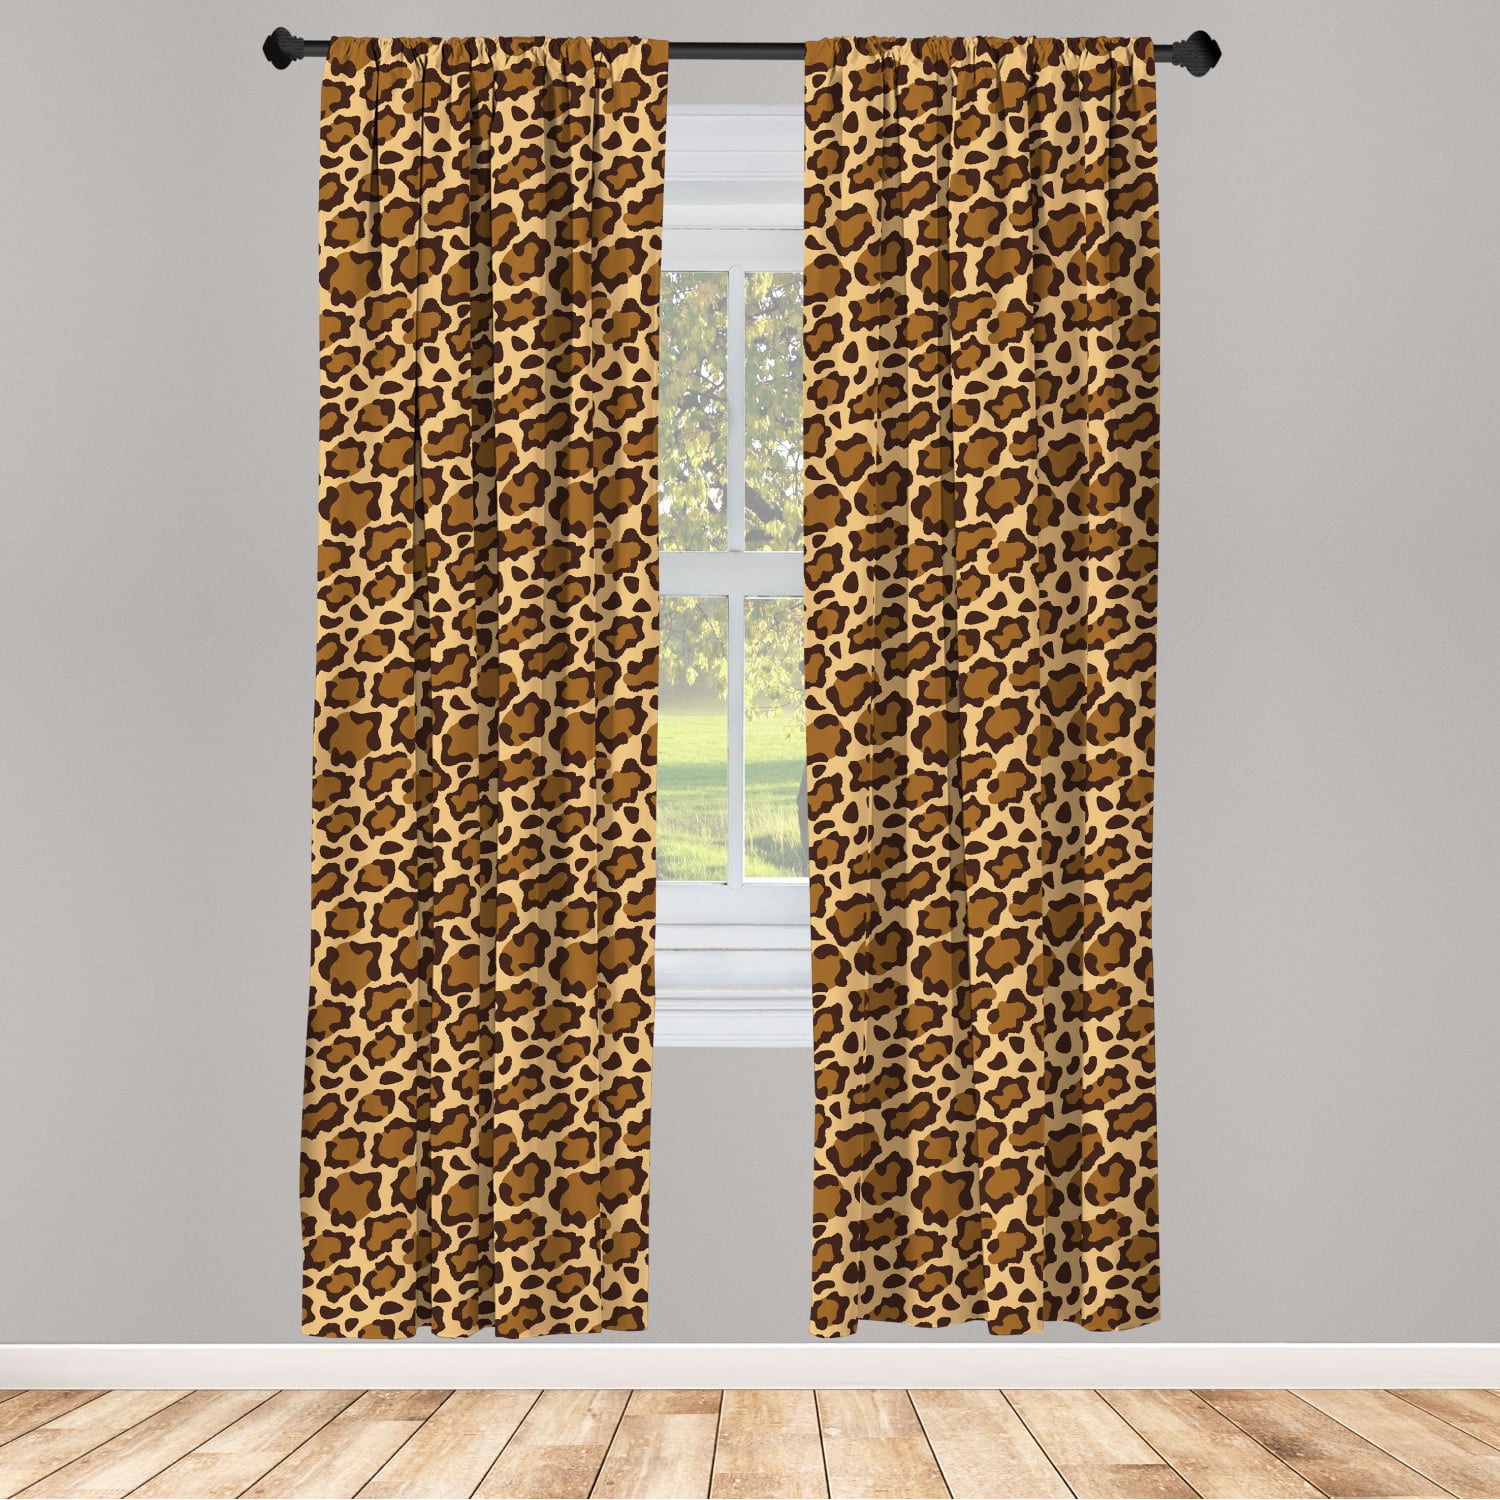 Leopard Print Curtains 2 Panels Set, Rhythmic Altered Version of ...